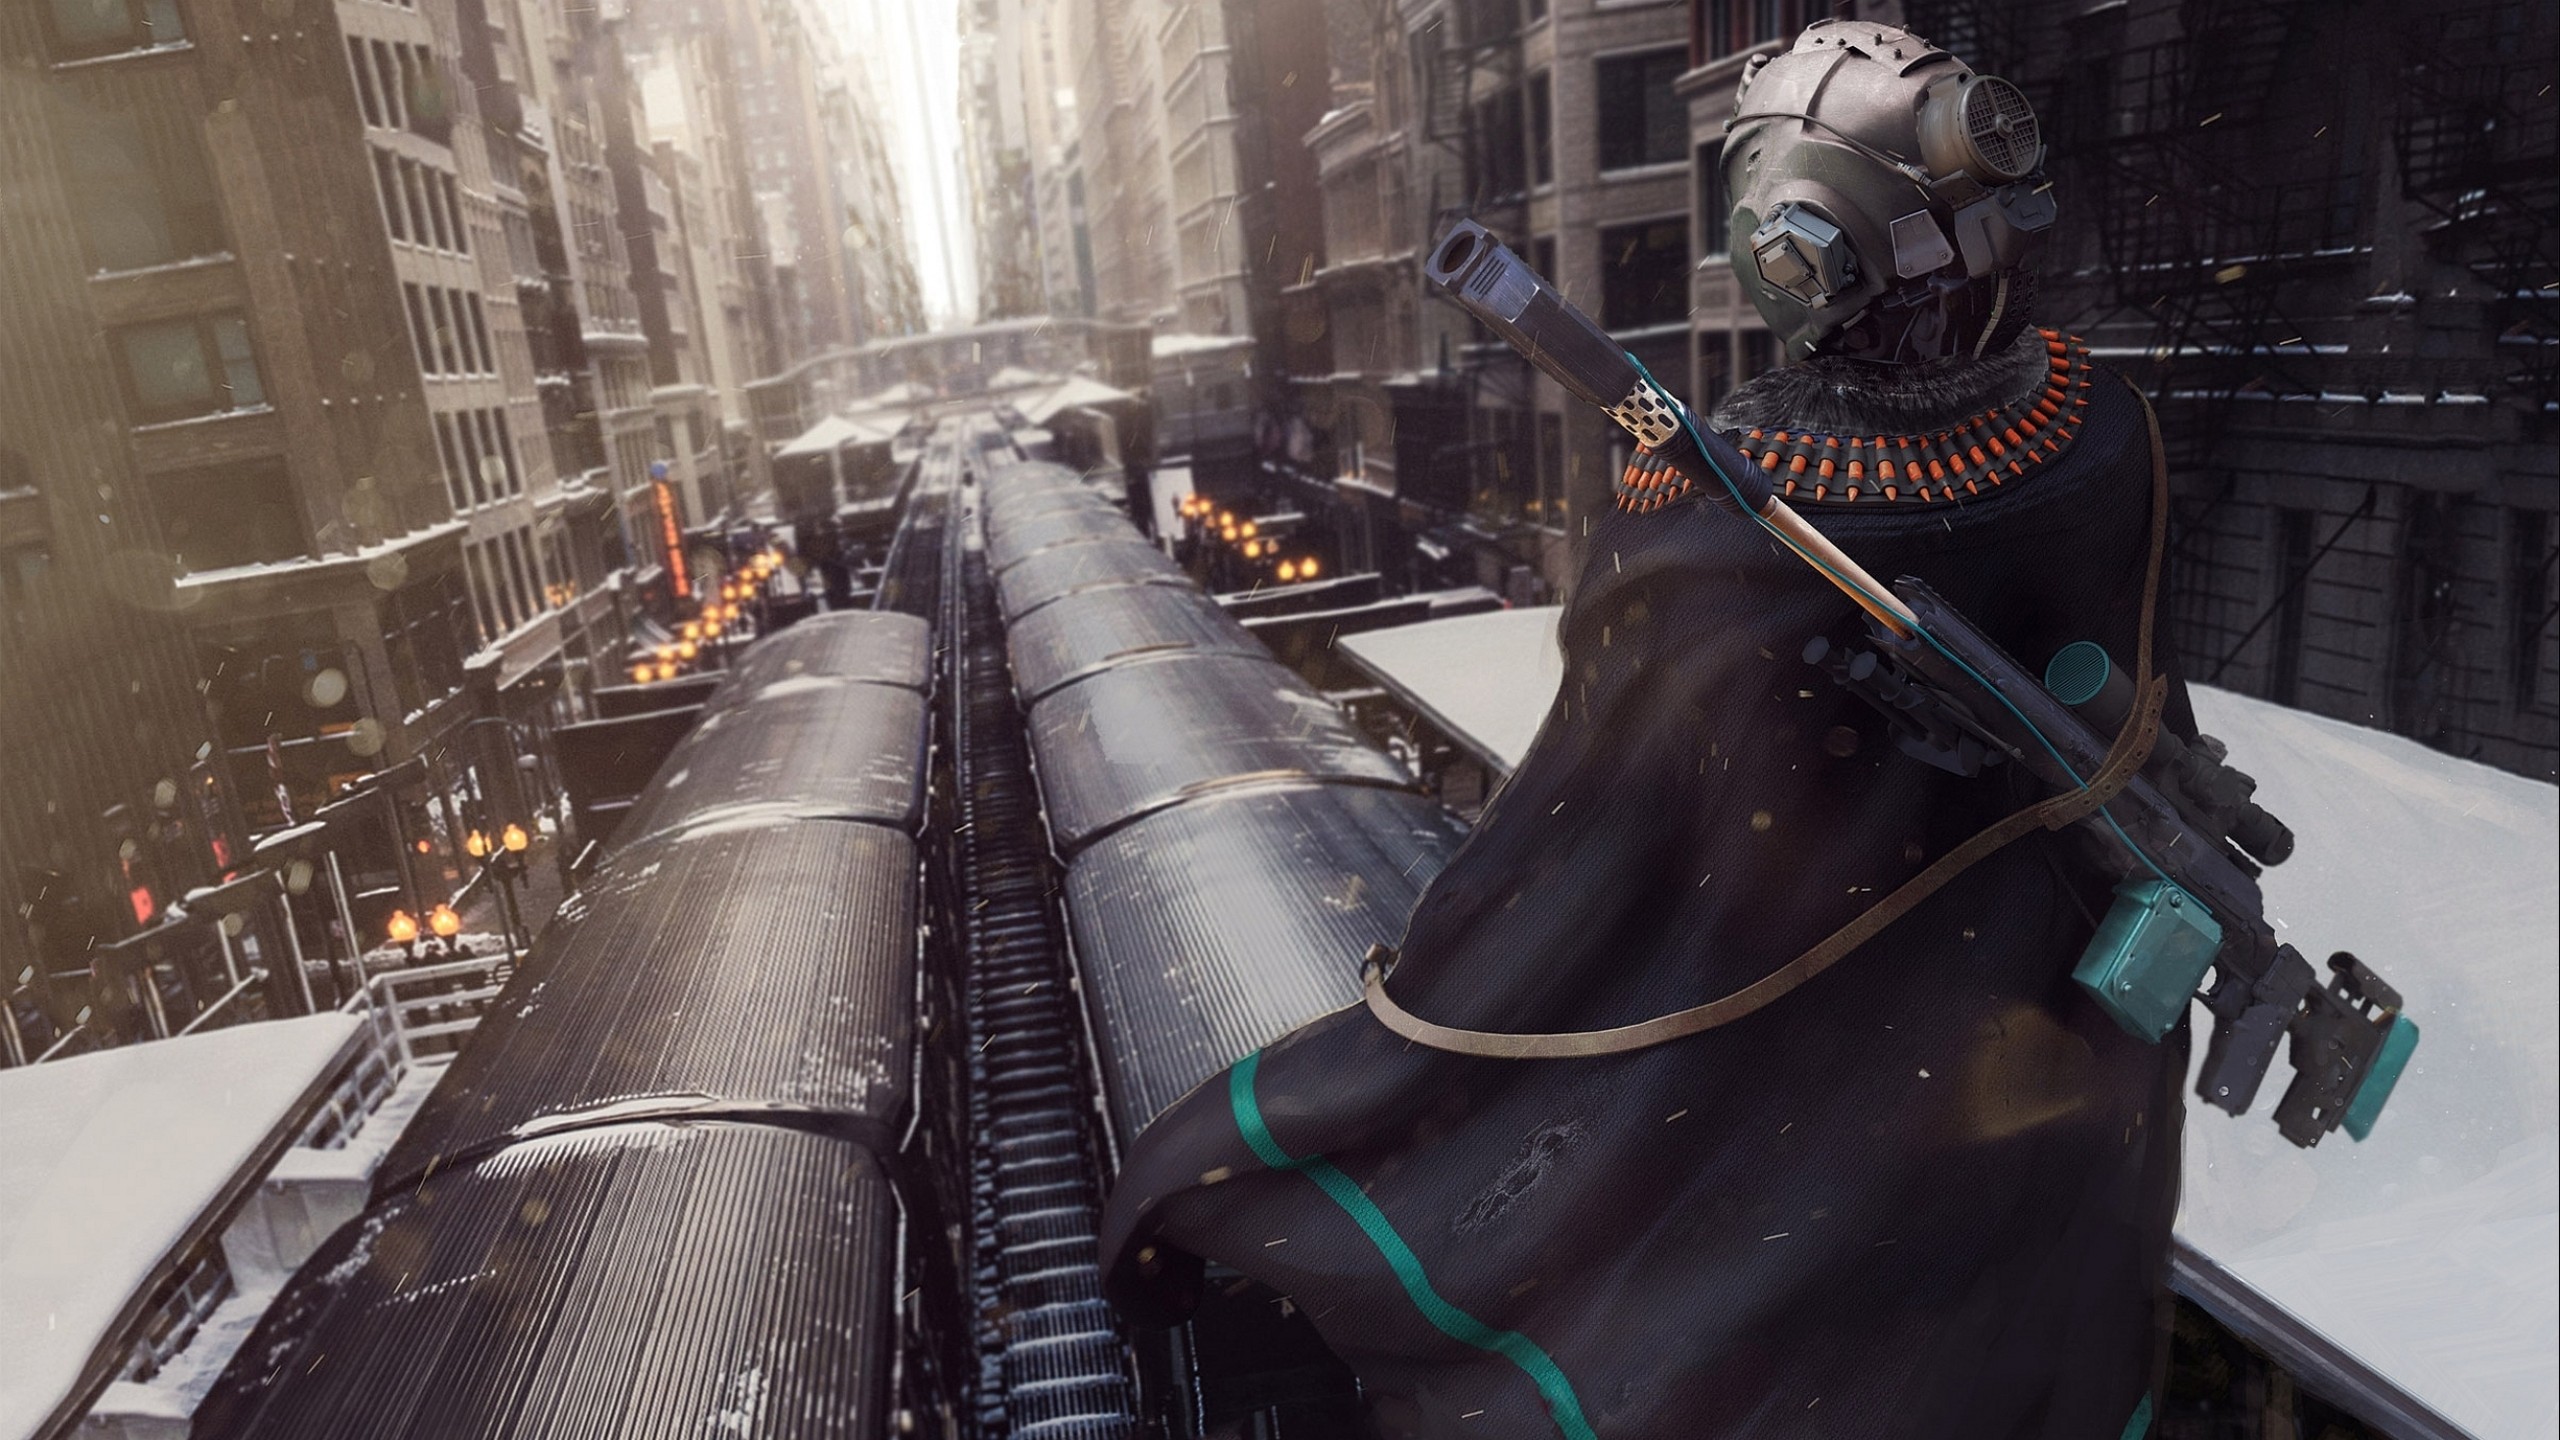 General 2560x1440 artwork digital art soldier city train sniper rifle cyberpunk cyborg androids robot